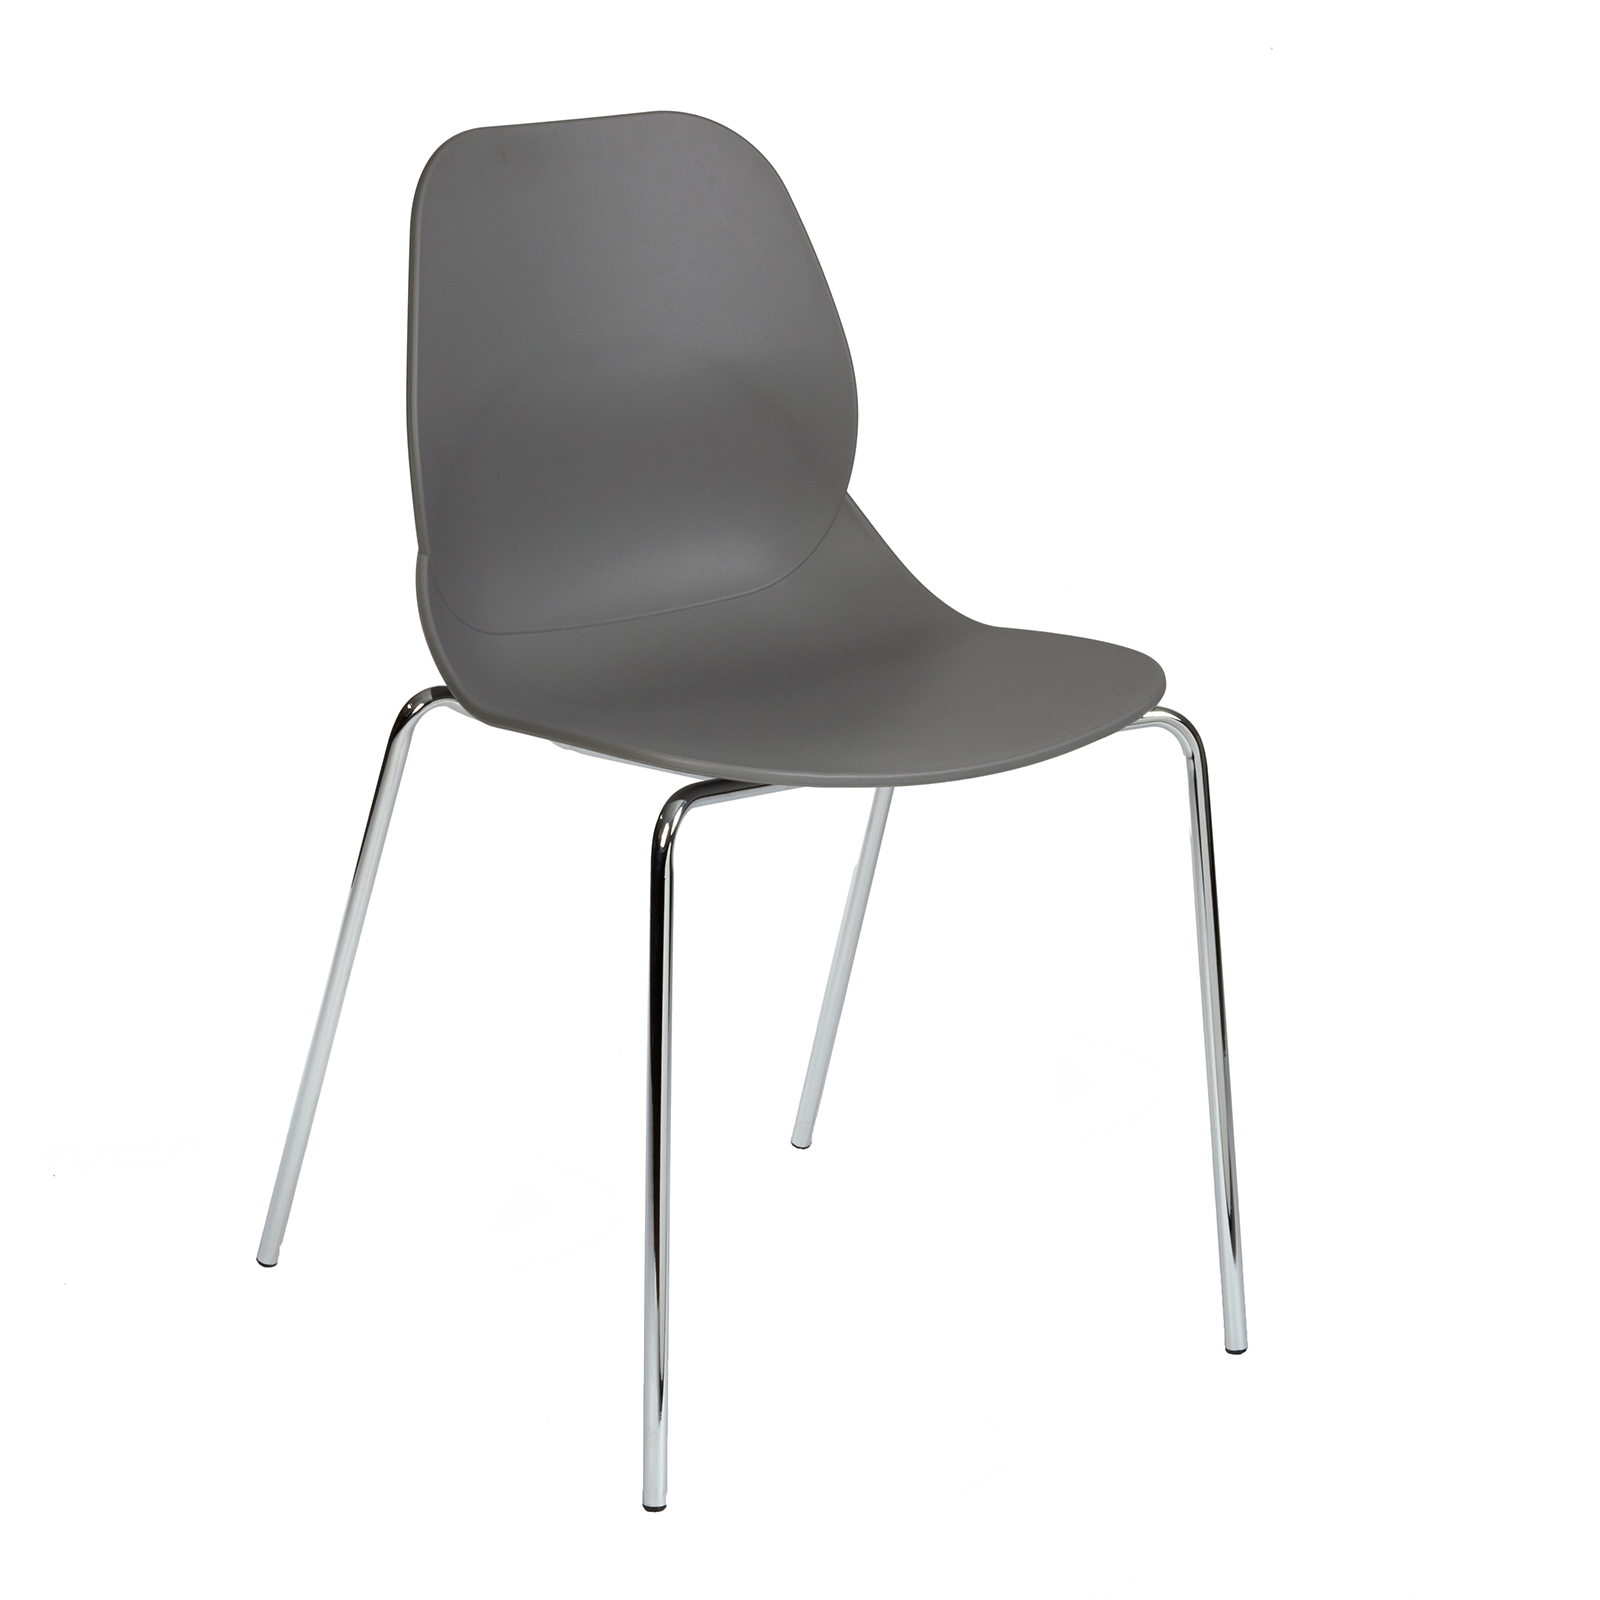 Strut multi-purpose chair with chrome 4 leg frame - grey